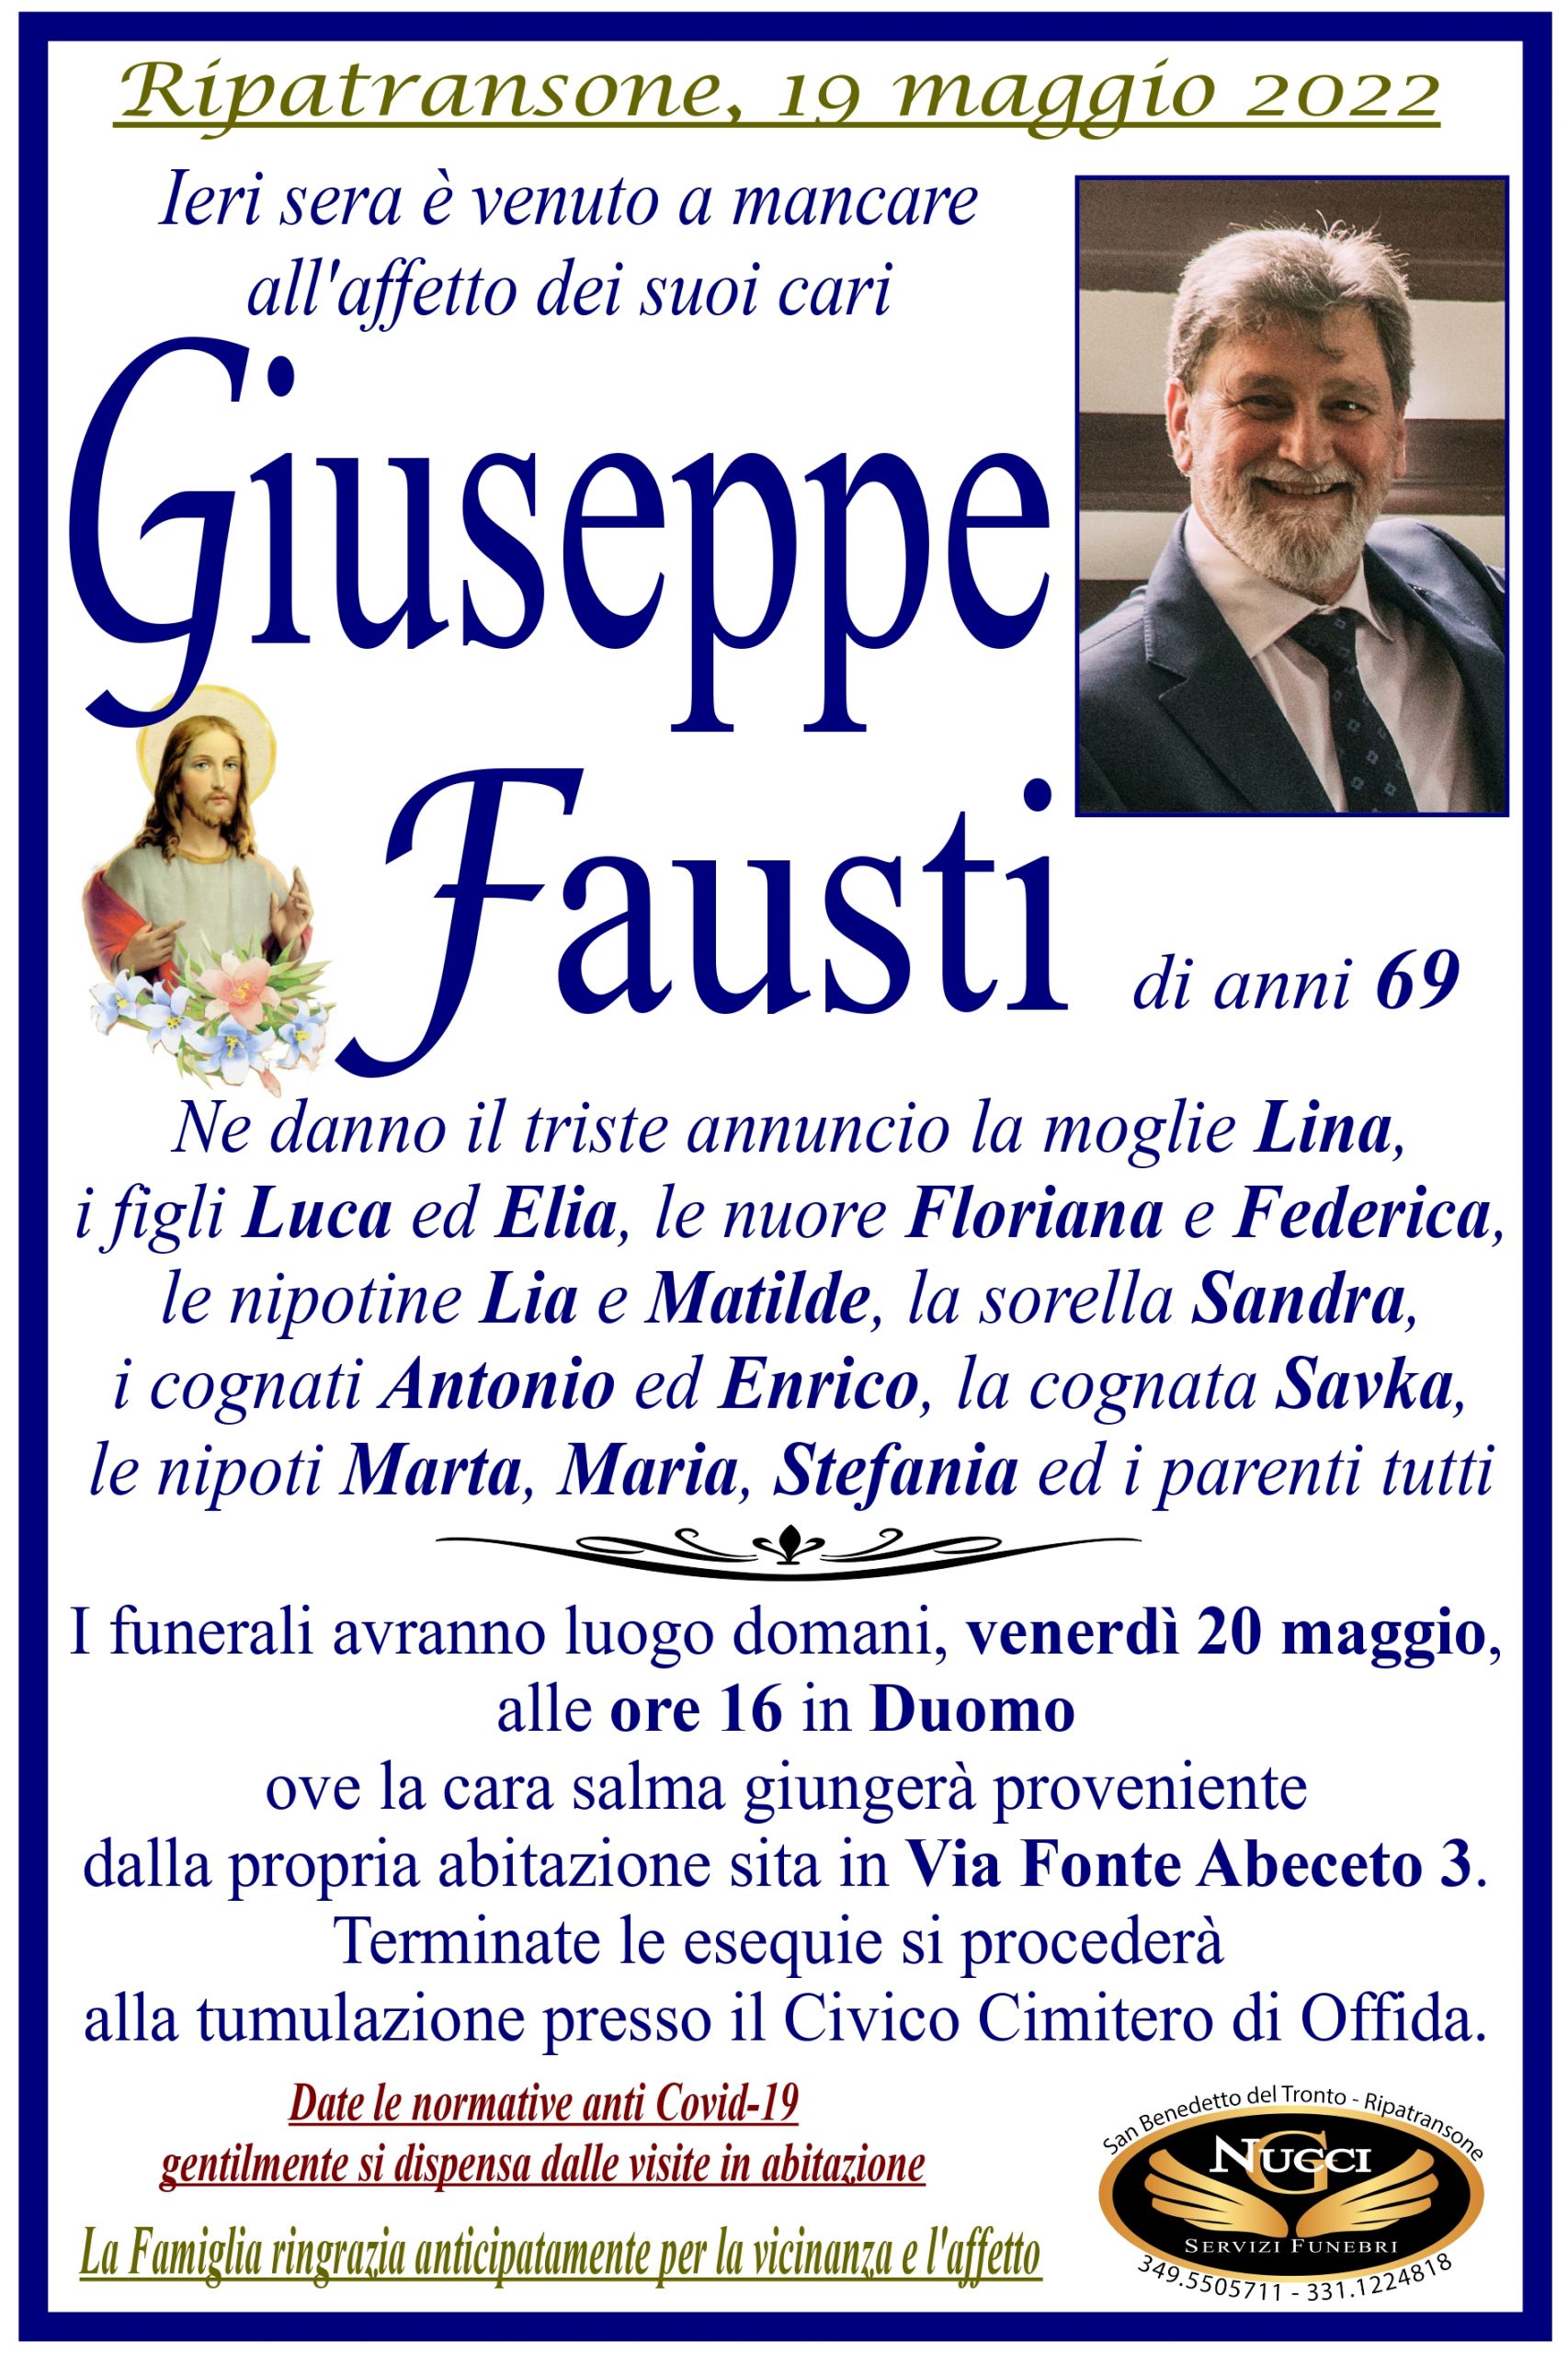 Giuseppe Fausti